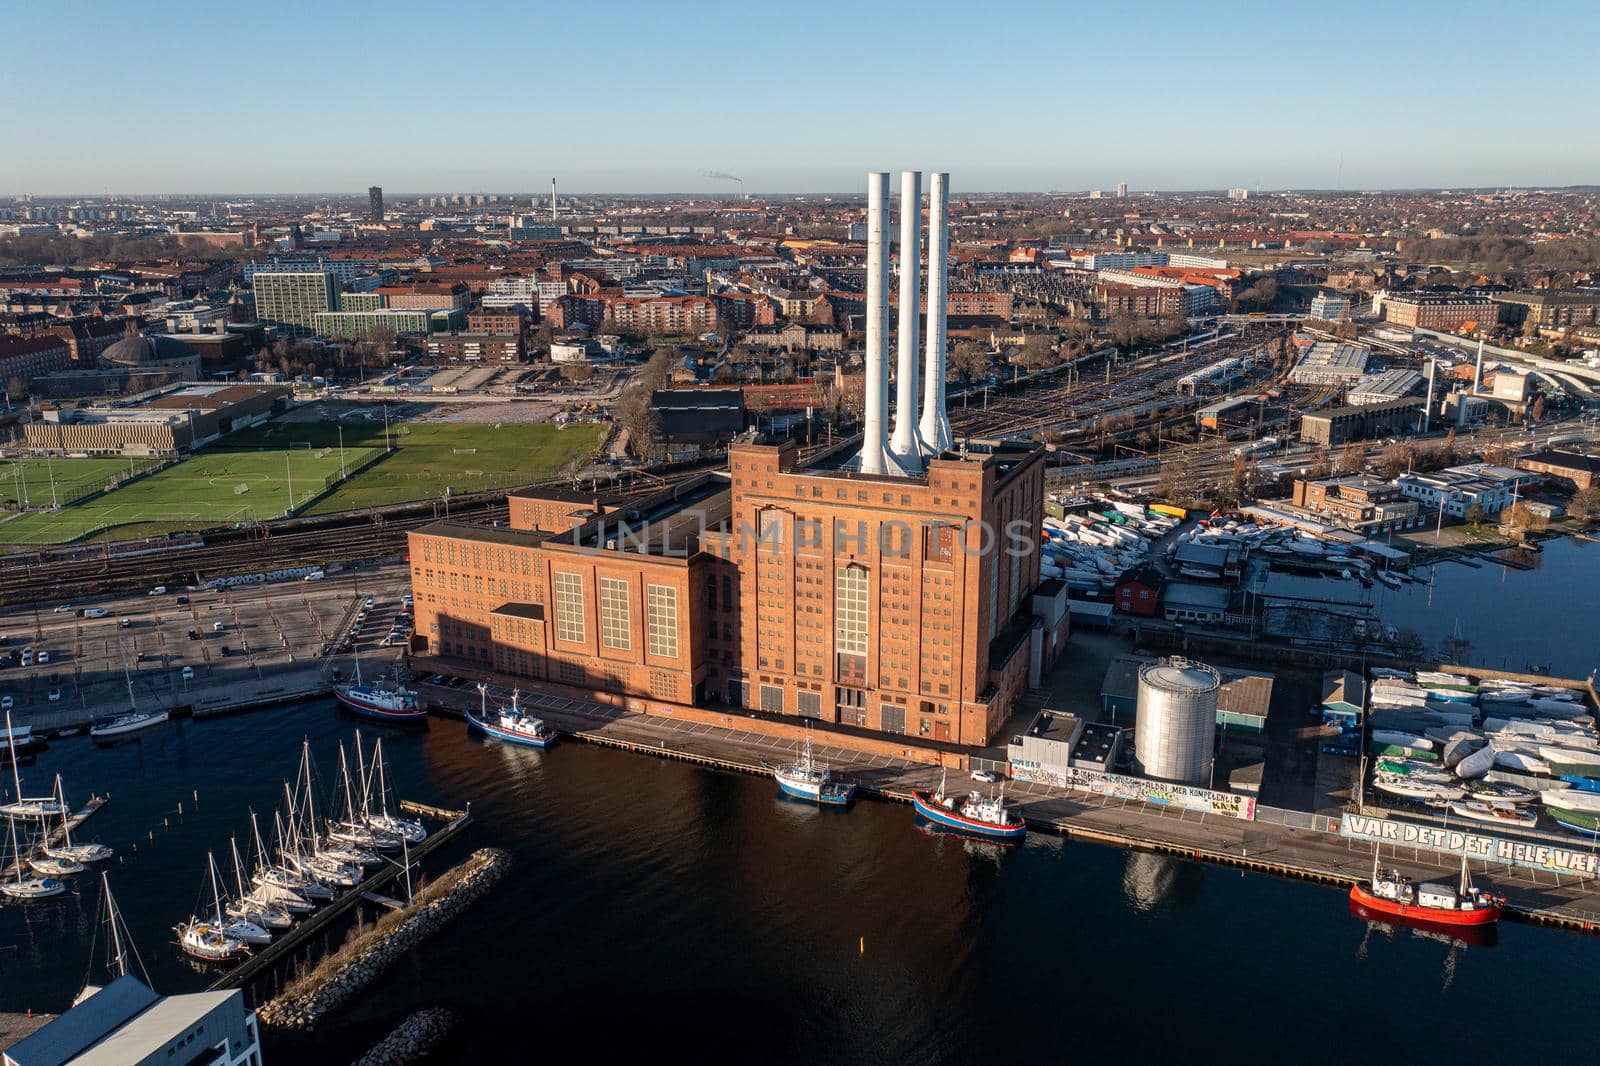 Drone View of Svanemolle Power Station in Copenhagen by oliverfoerstner